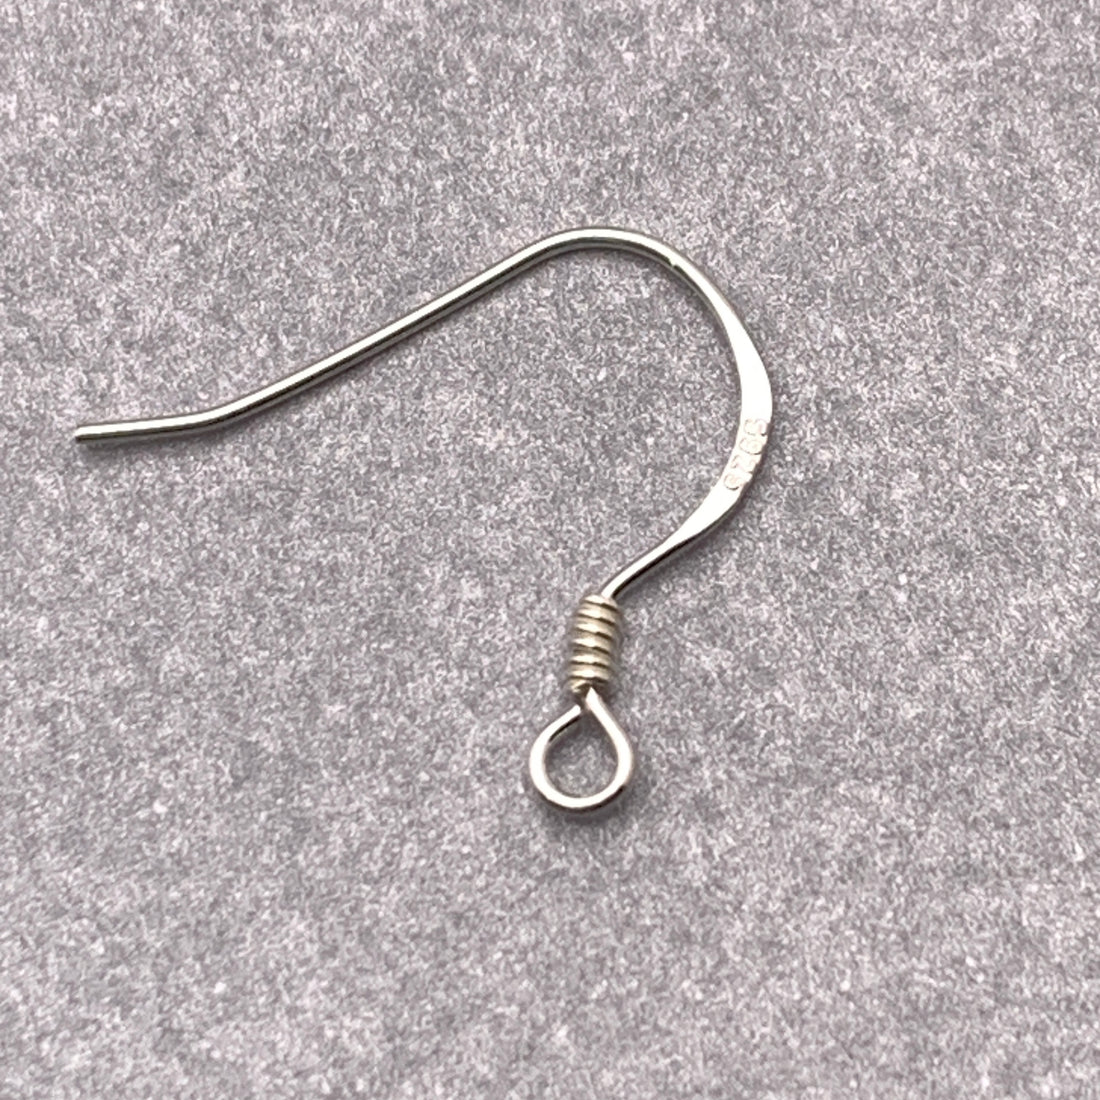 S925 Sterling Silver Earring Hooks, Light Silver Colour 18mm - 4